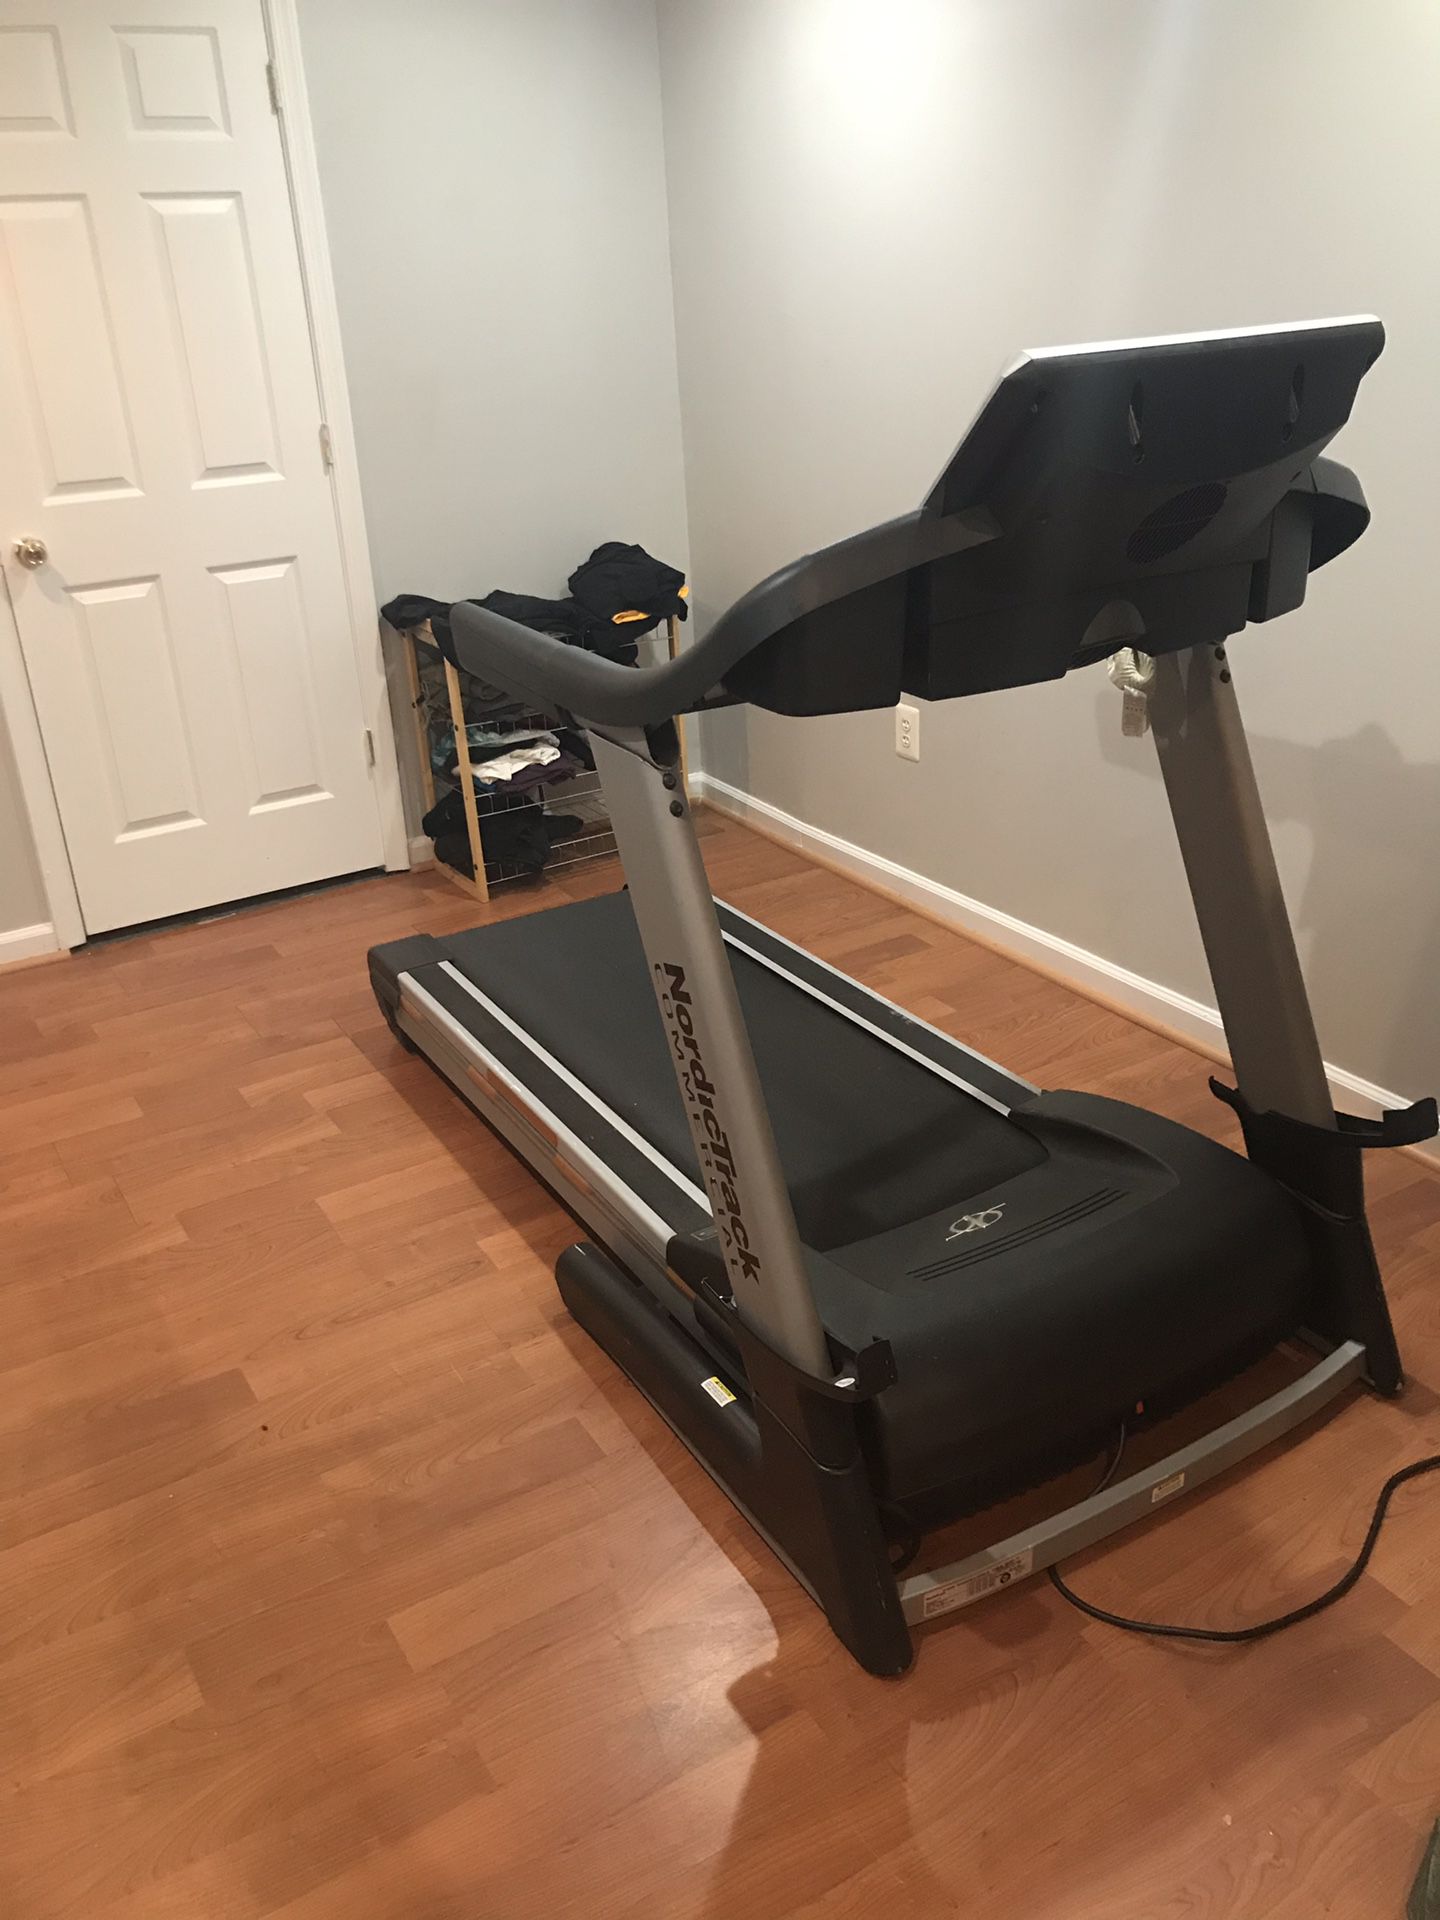 NordicTrack commercial treadmill